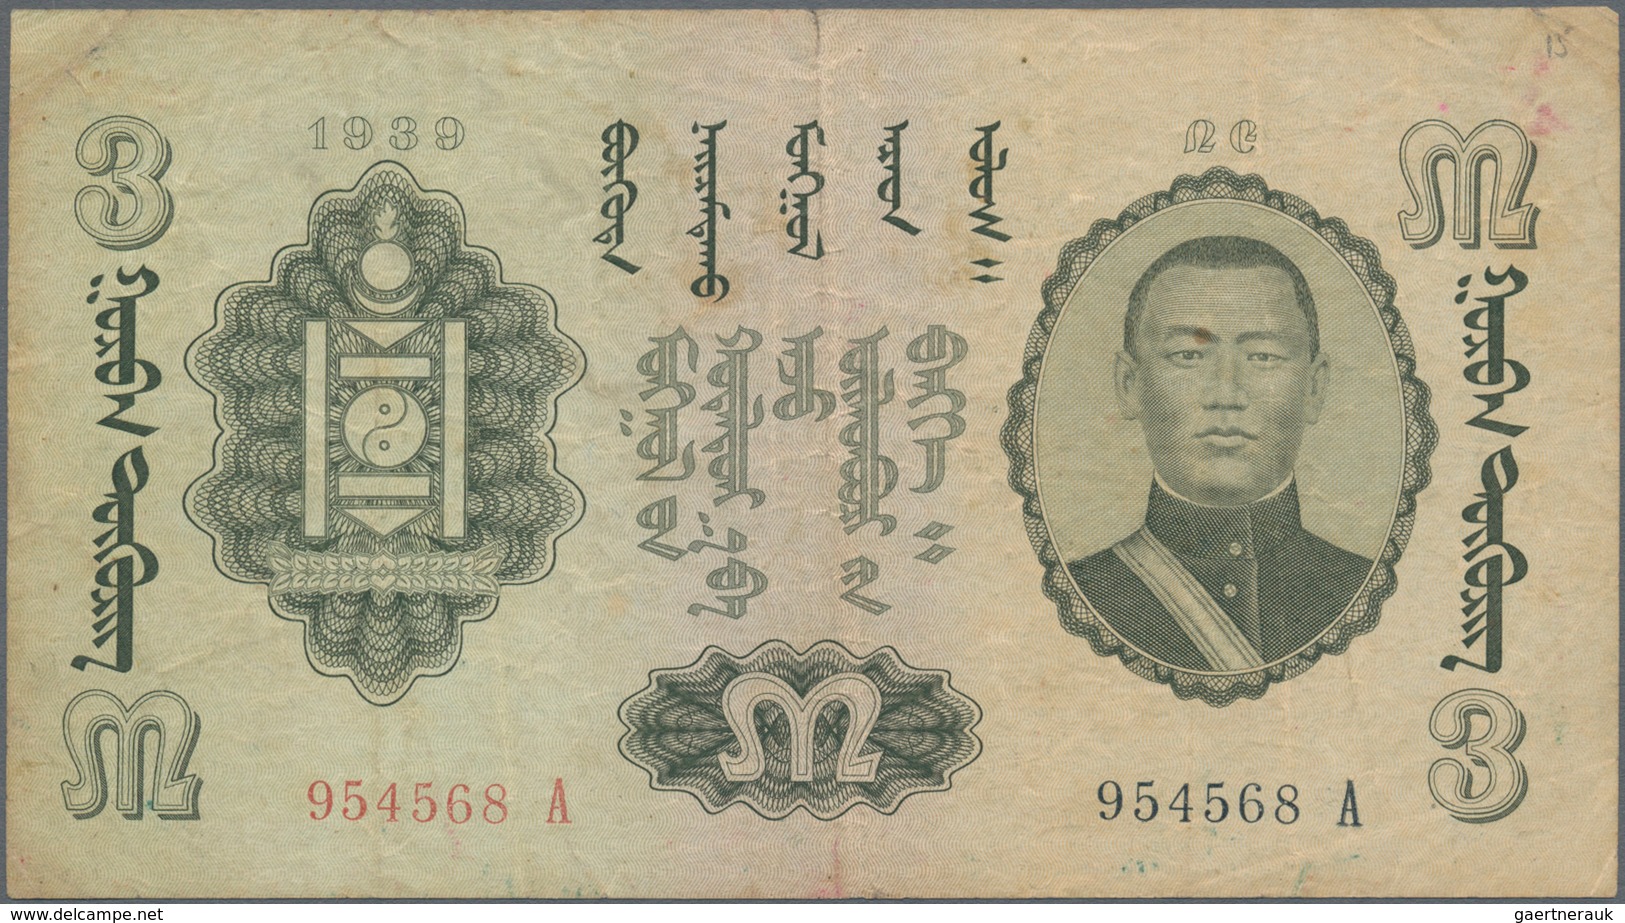 Mongolia / Mongolei: Pair With 1 Tugrik 1939 P.14 (F/F+) And 3 Tugrik 1939 P.15 (F). (2 Pcs.) Rare! - Mongolei